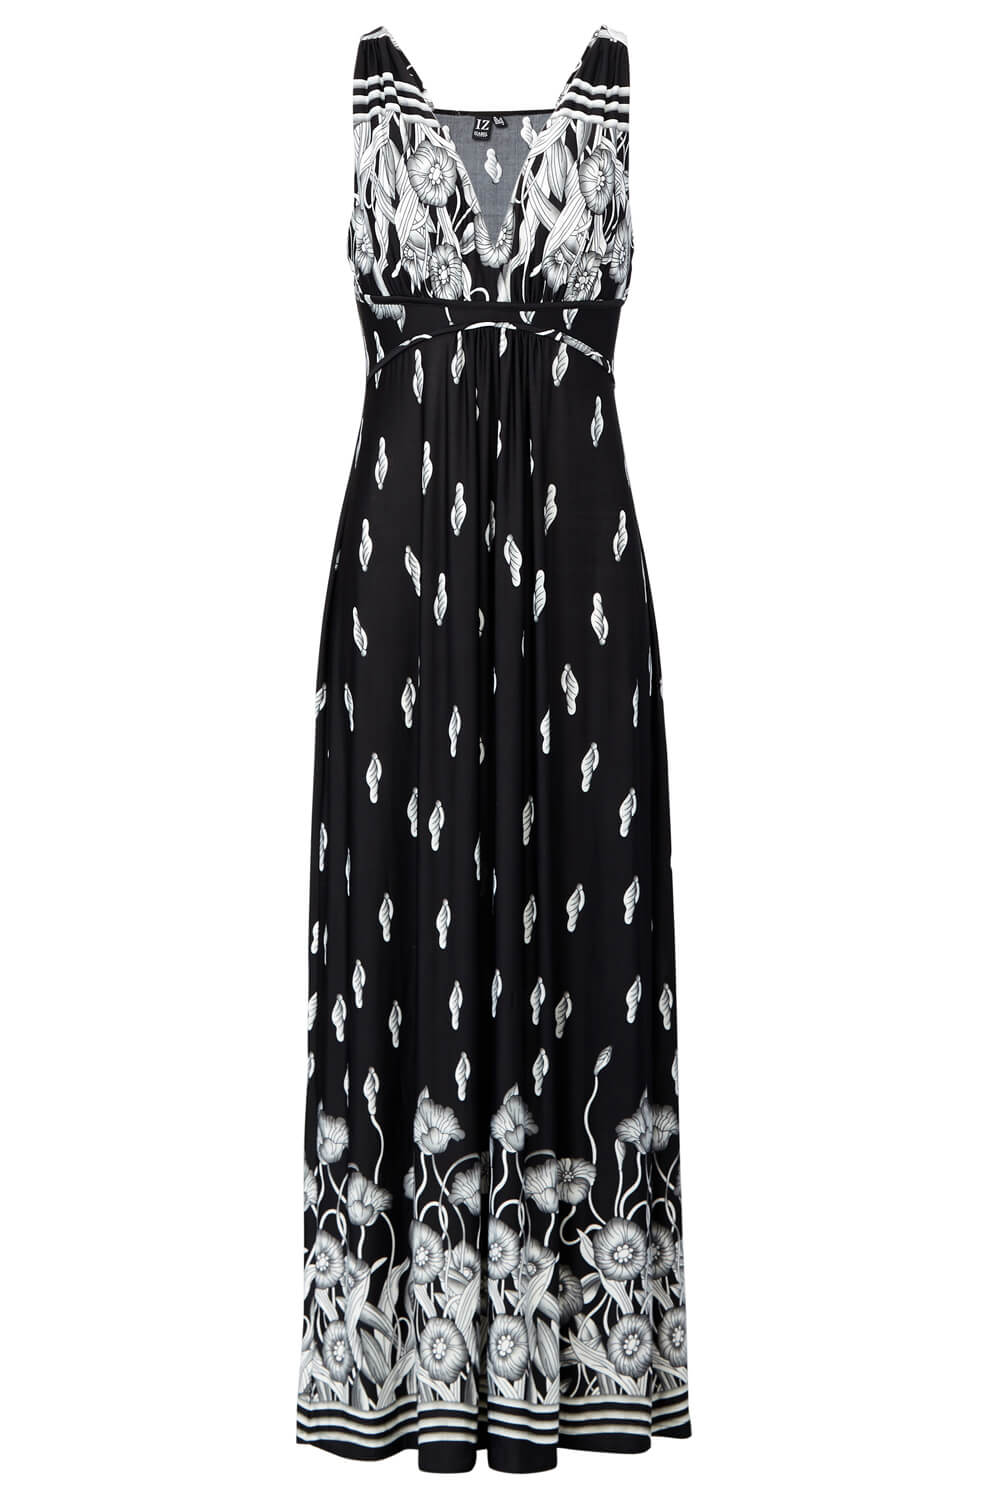 Izabel London Tribal Print Maxi Dress in Black - Roman Originals UK